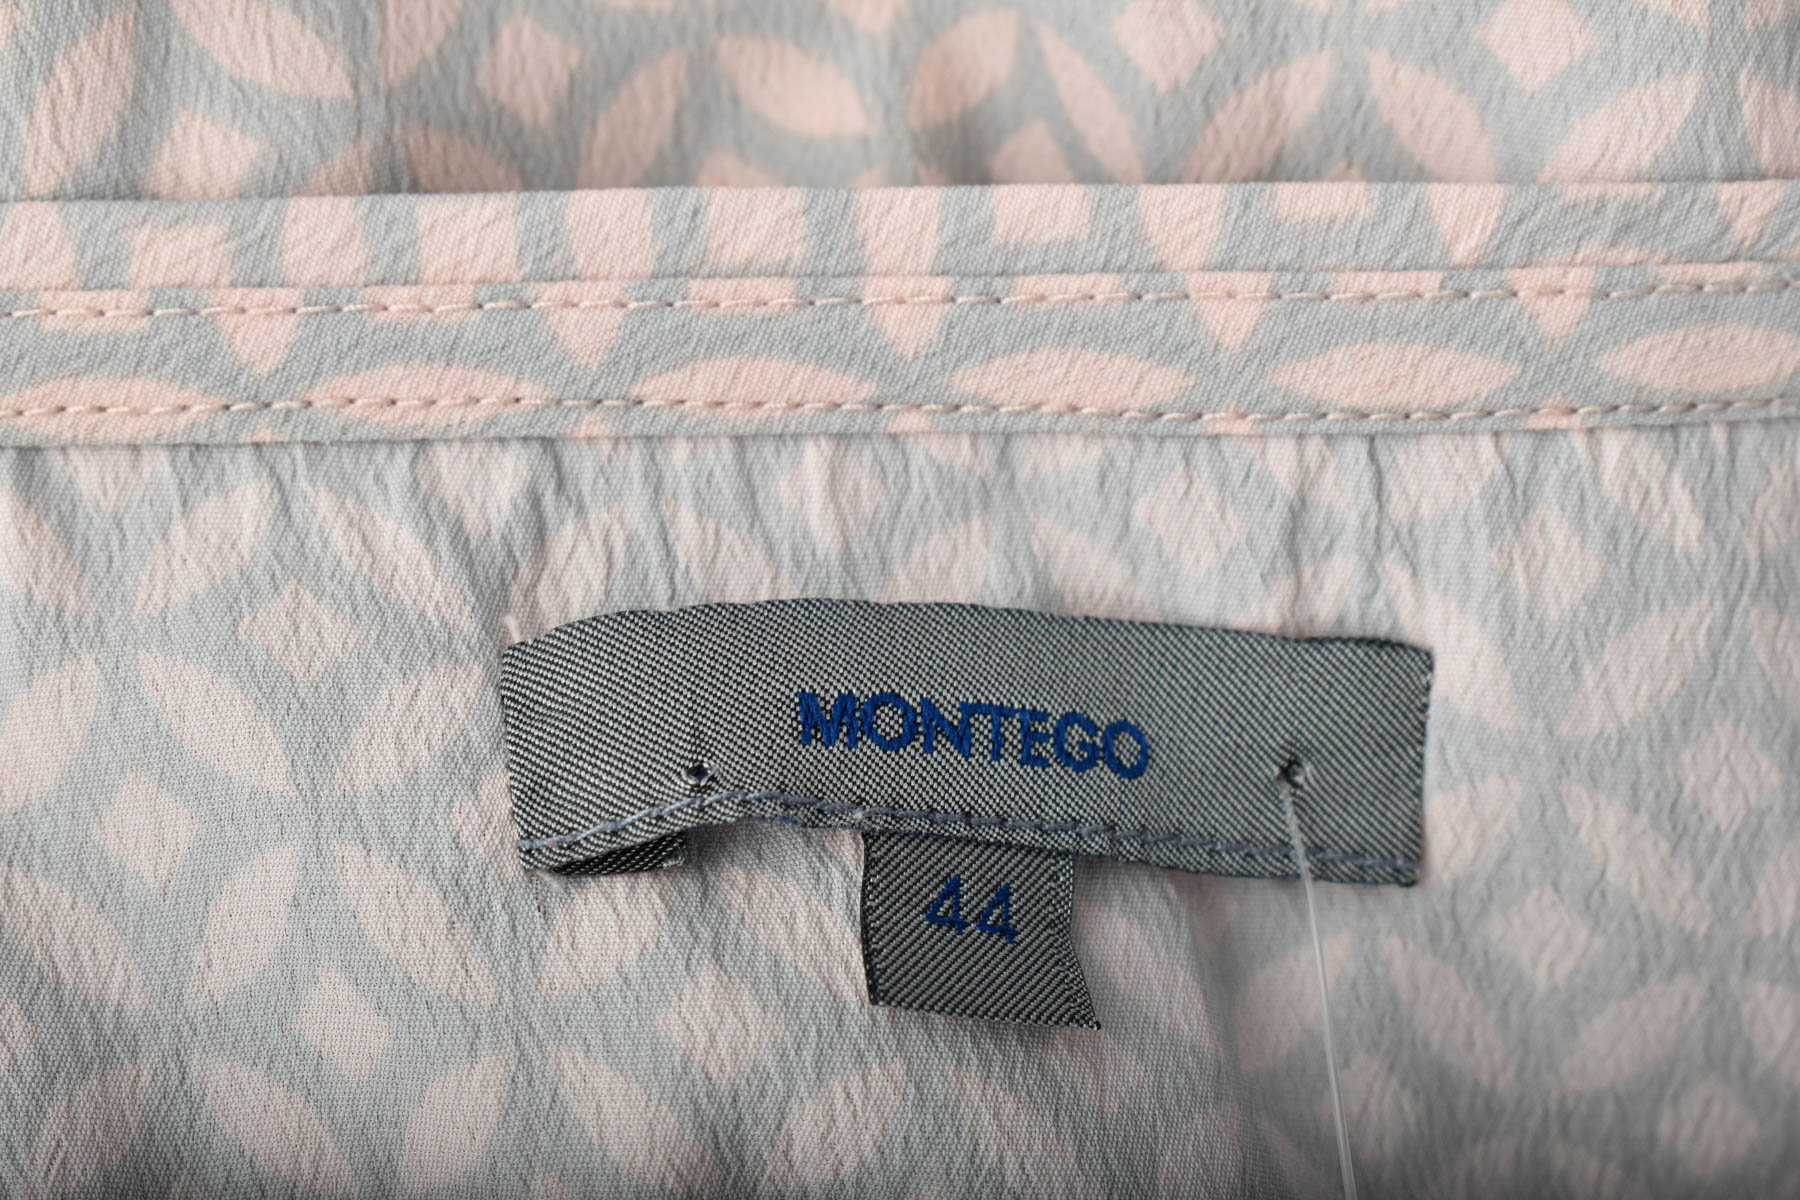 Women's shirt - MONTEGO - 2